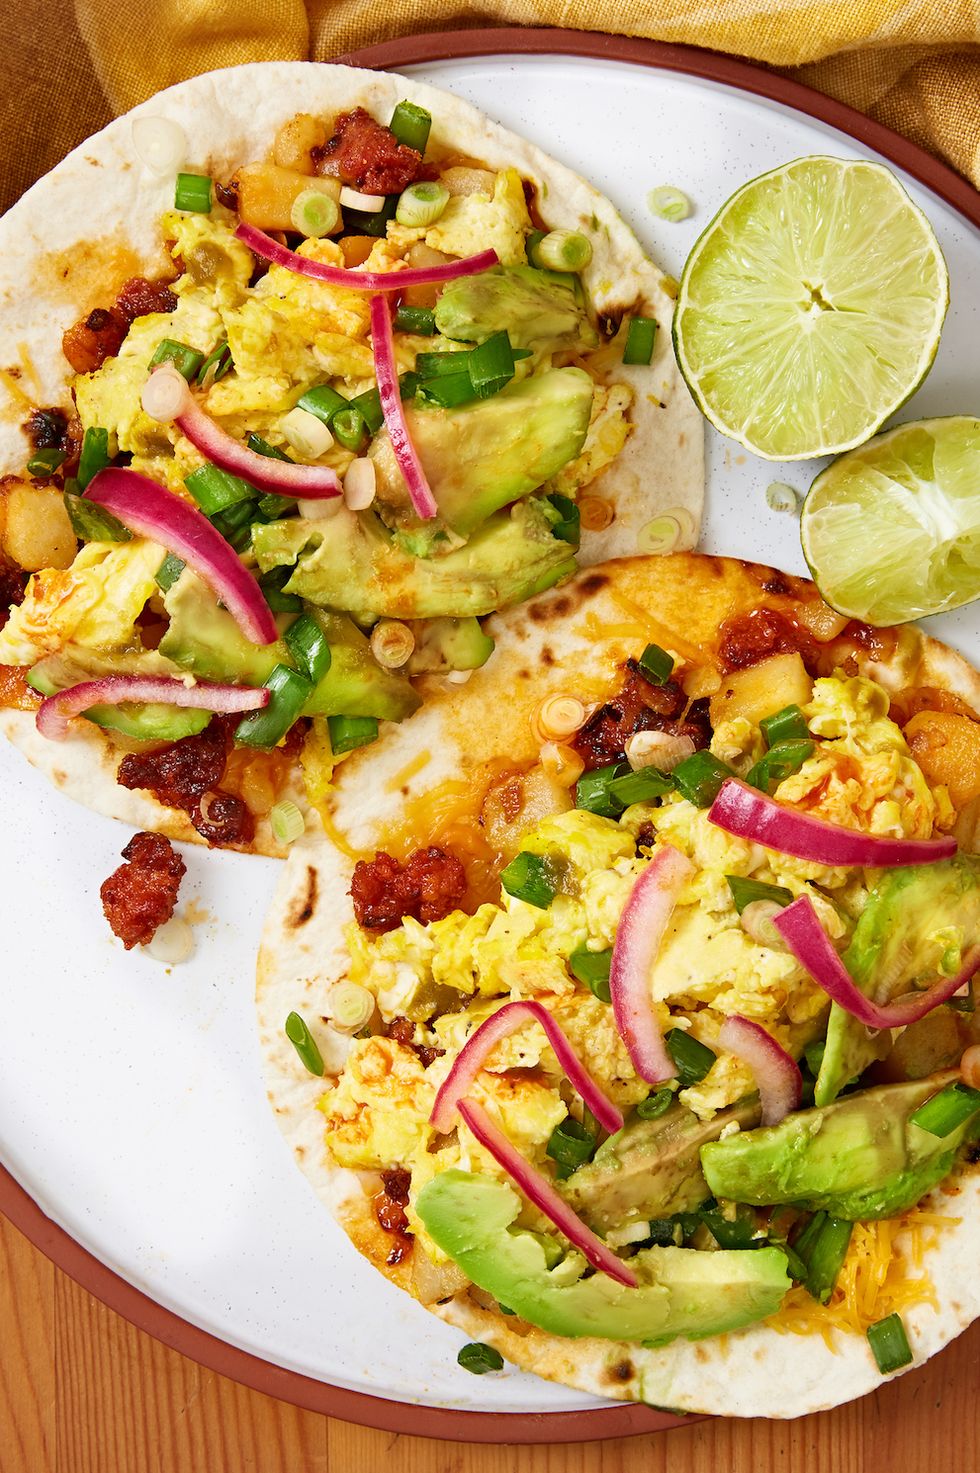 breakfast tacos with scrambled eggs on a flour tortilla